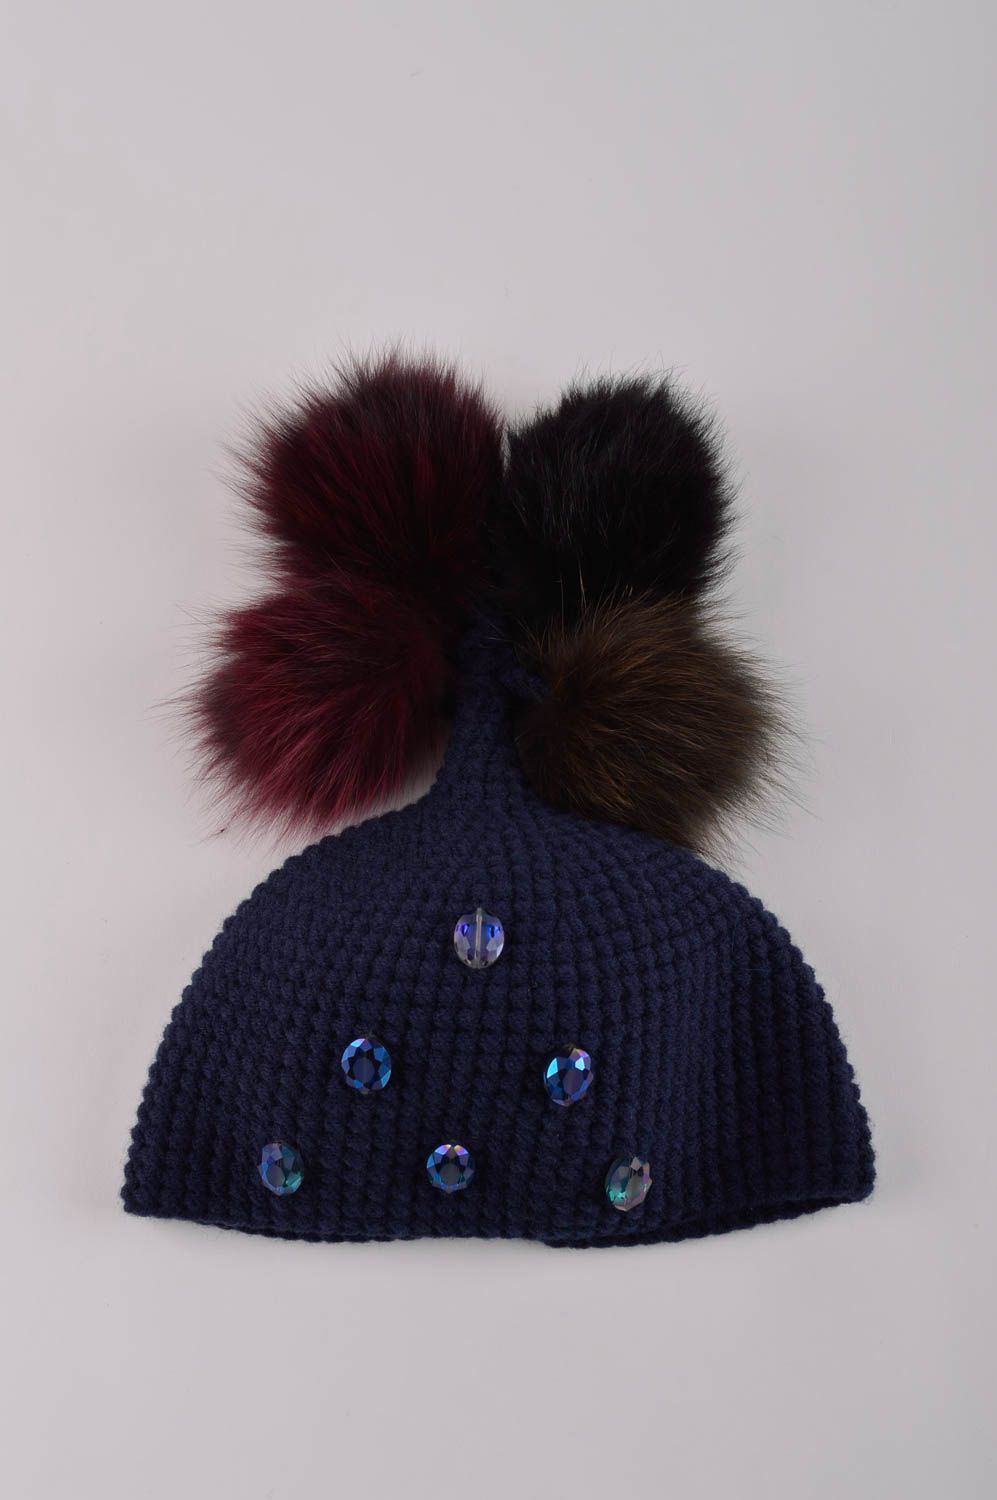 Handmade ladies hat fashion accessories ladies winter hat warm hat gifts for her photo 5